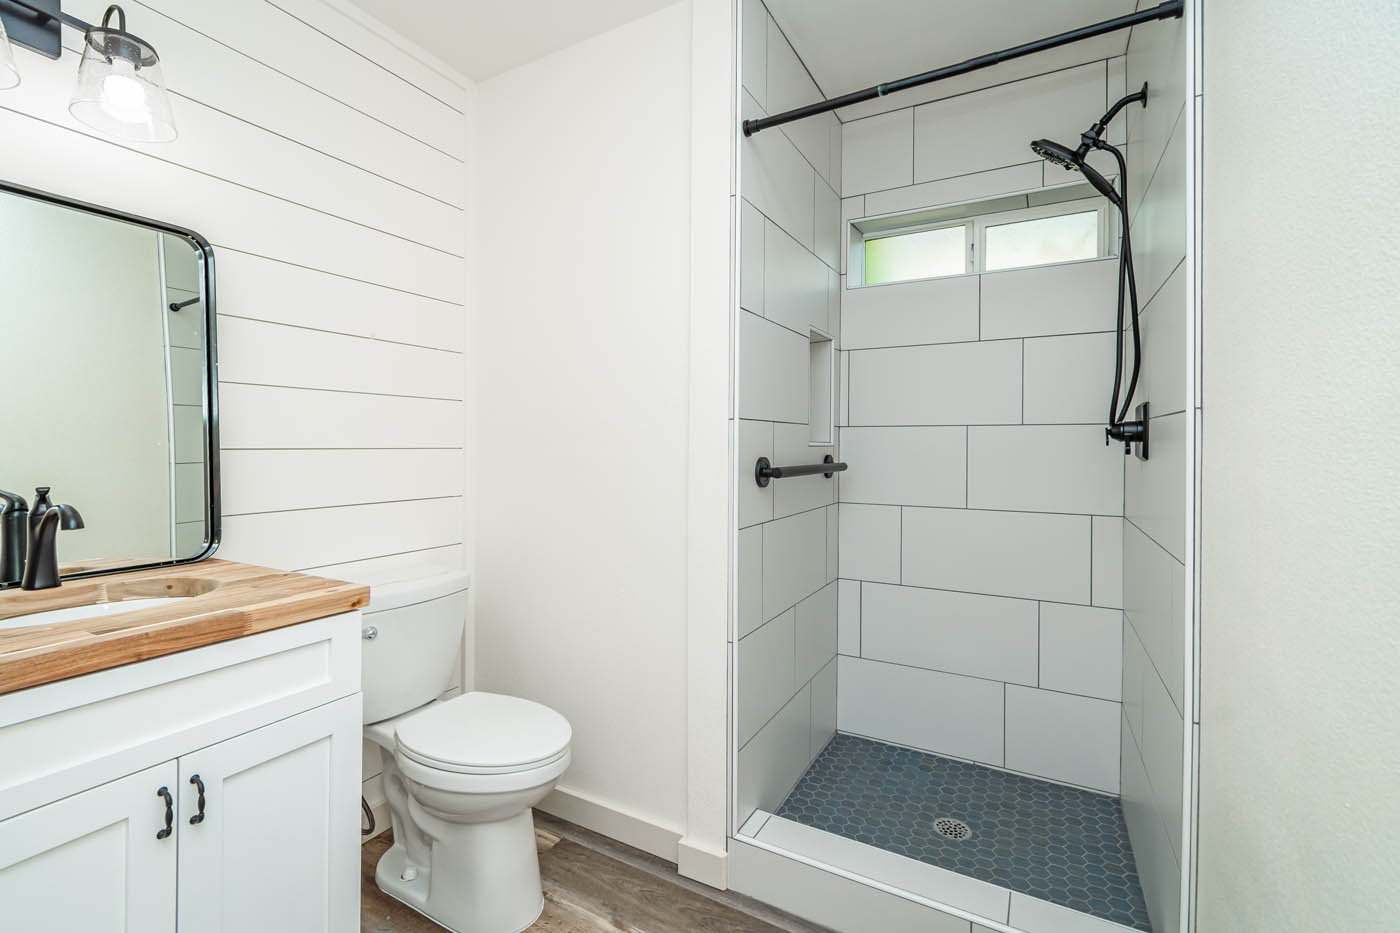 A modern white bathroom in a casita home.